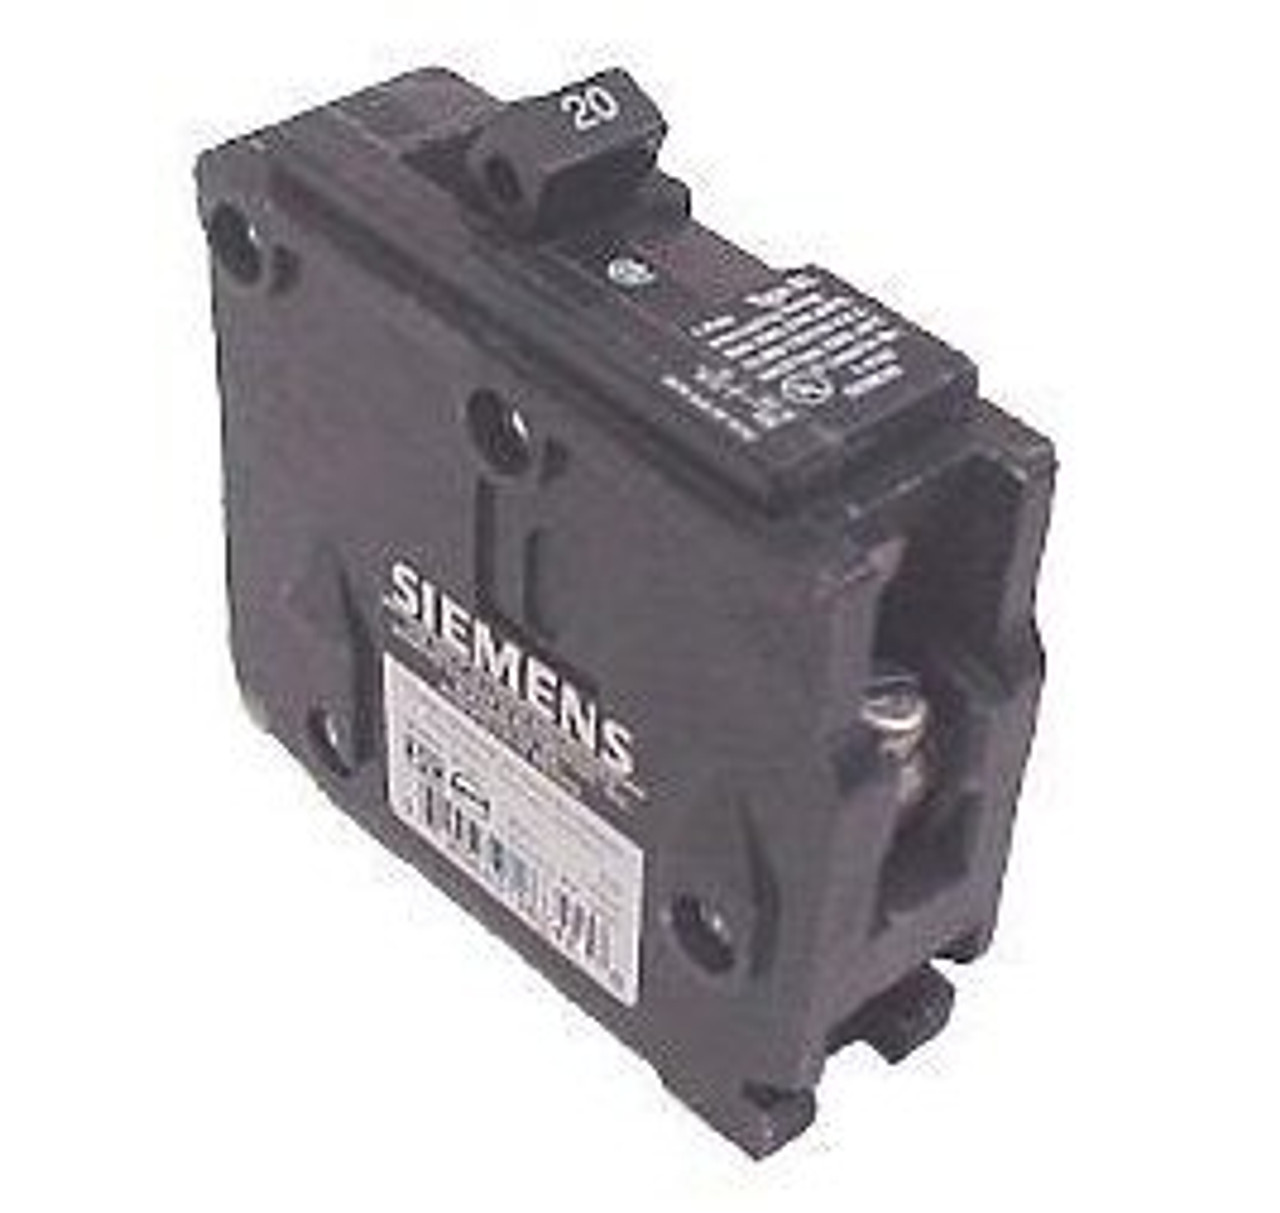 Siemens B120 1 Pole 20 Amp 120VAC Type BL Circuit Breaker - New